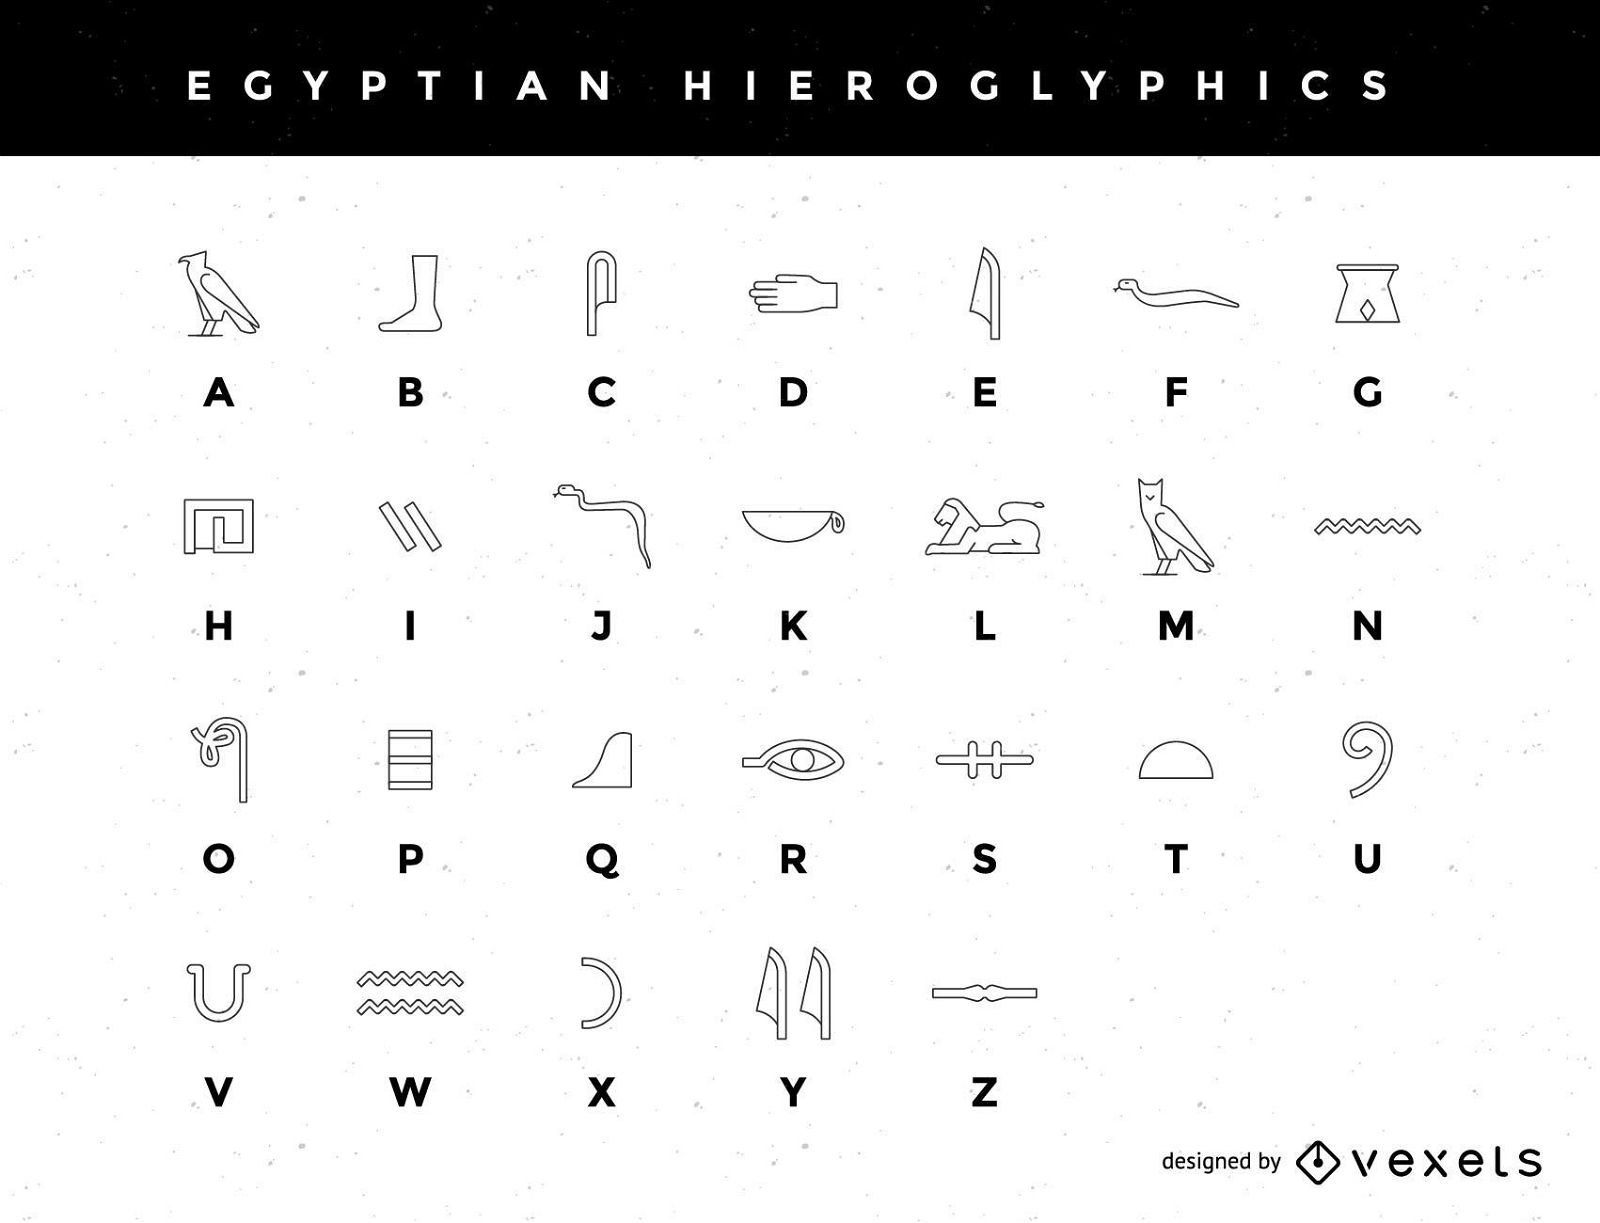 Um alfabeto hierogl?fico eg?pcio estilizado